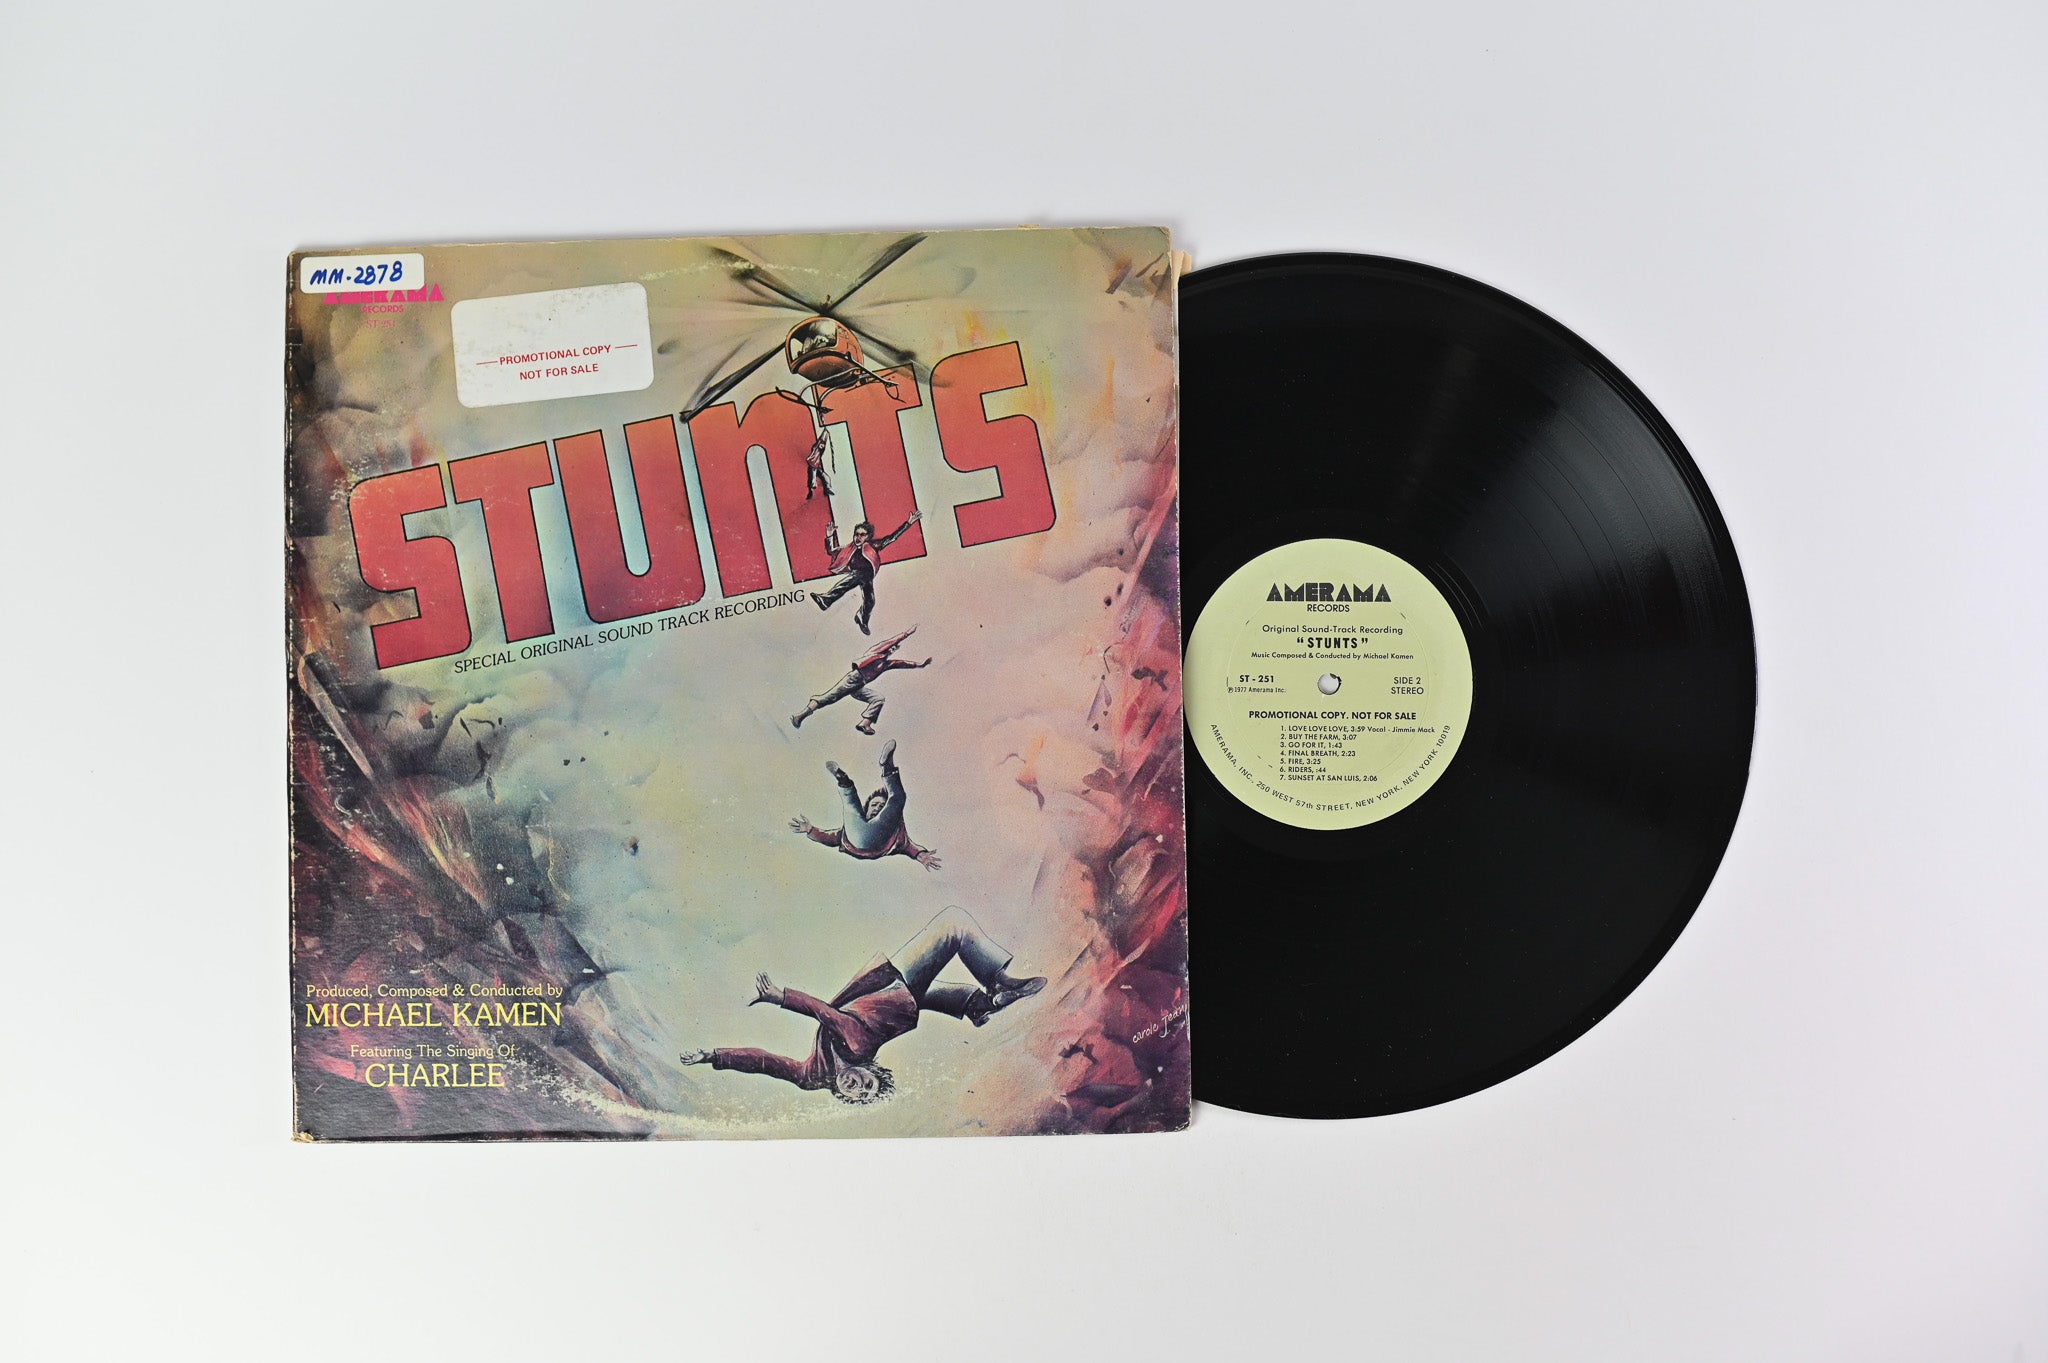 Michael Kamen - Stunts Promo on Amerama Records